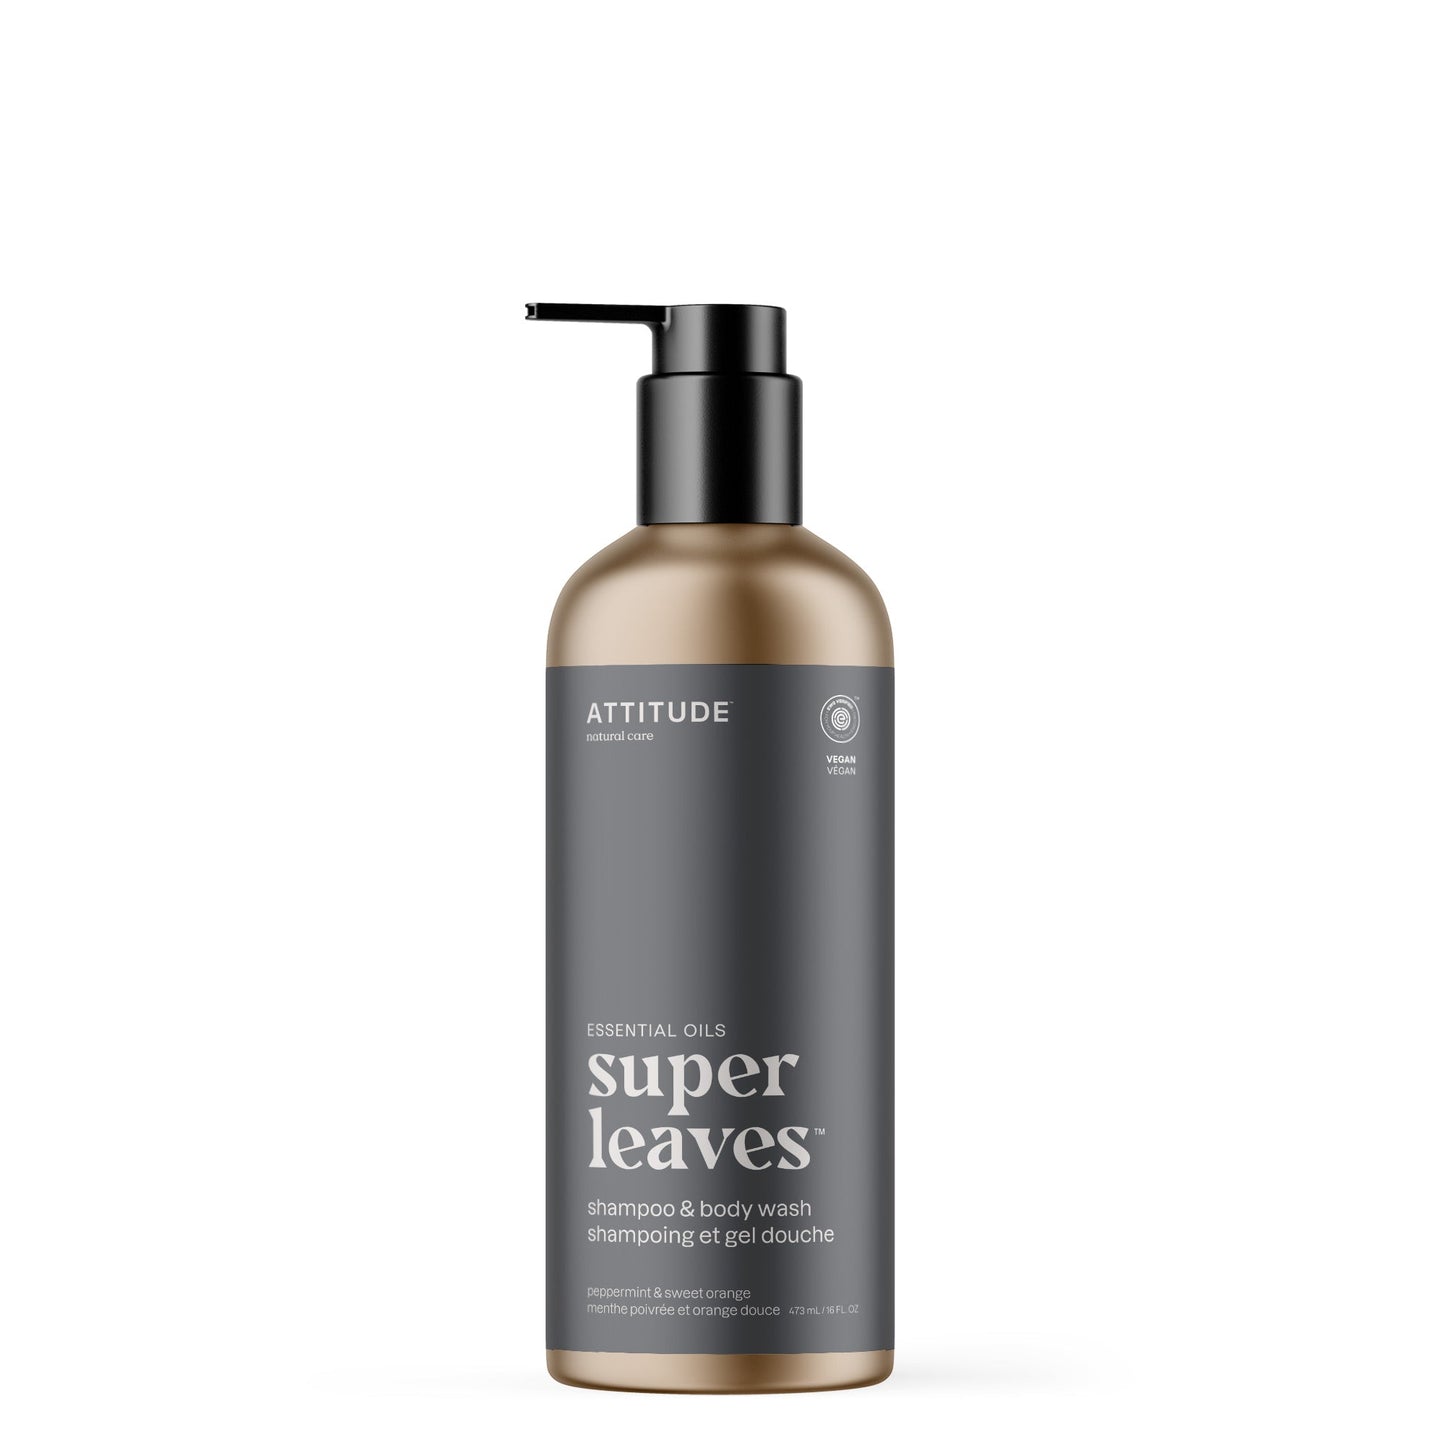 ATTITUDE Super Leaves Essential oils shampoo body wash Peppermint and sweet orange 19004-btob_en?_main? 473mL